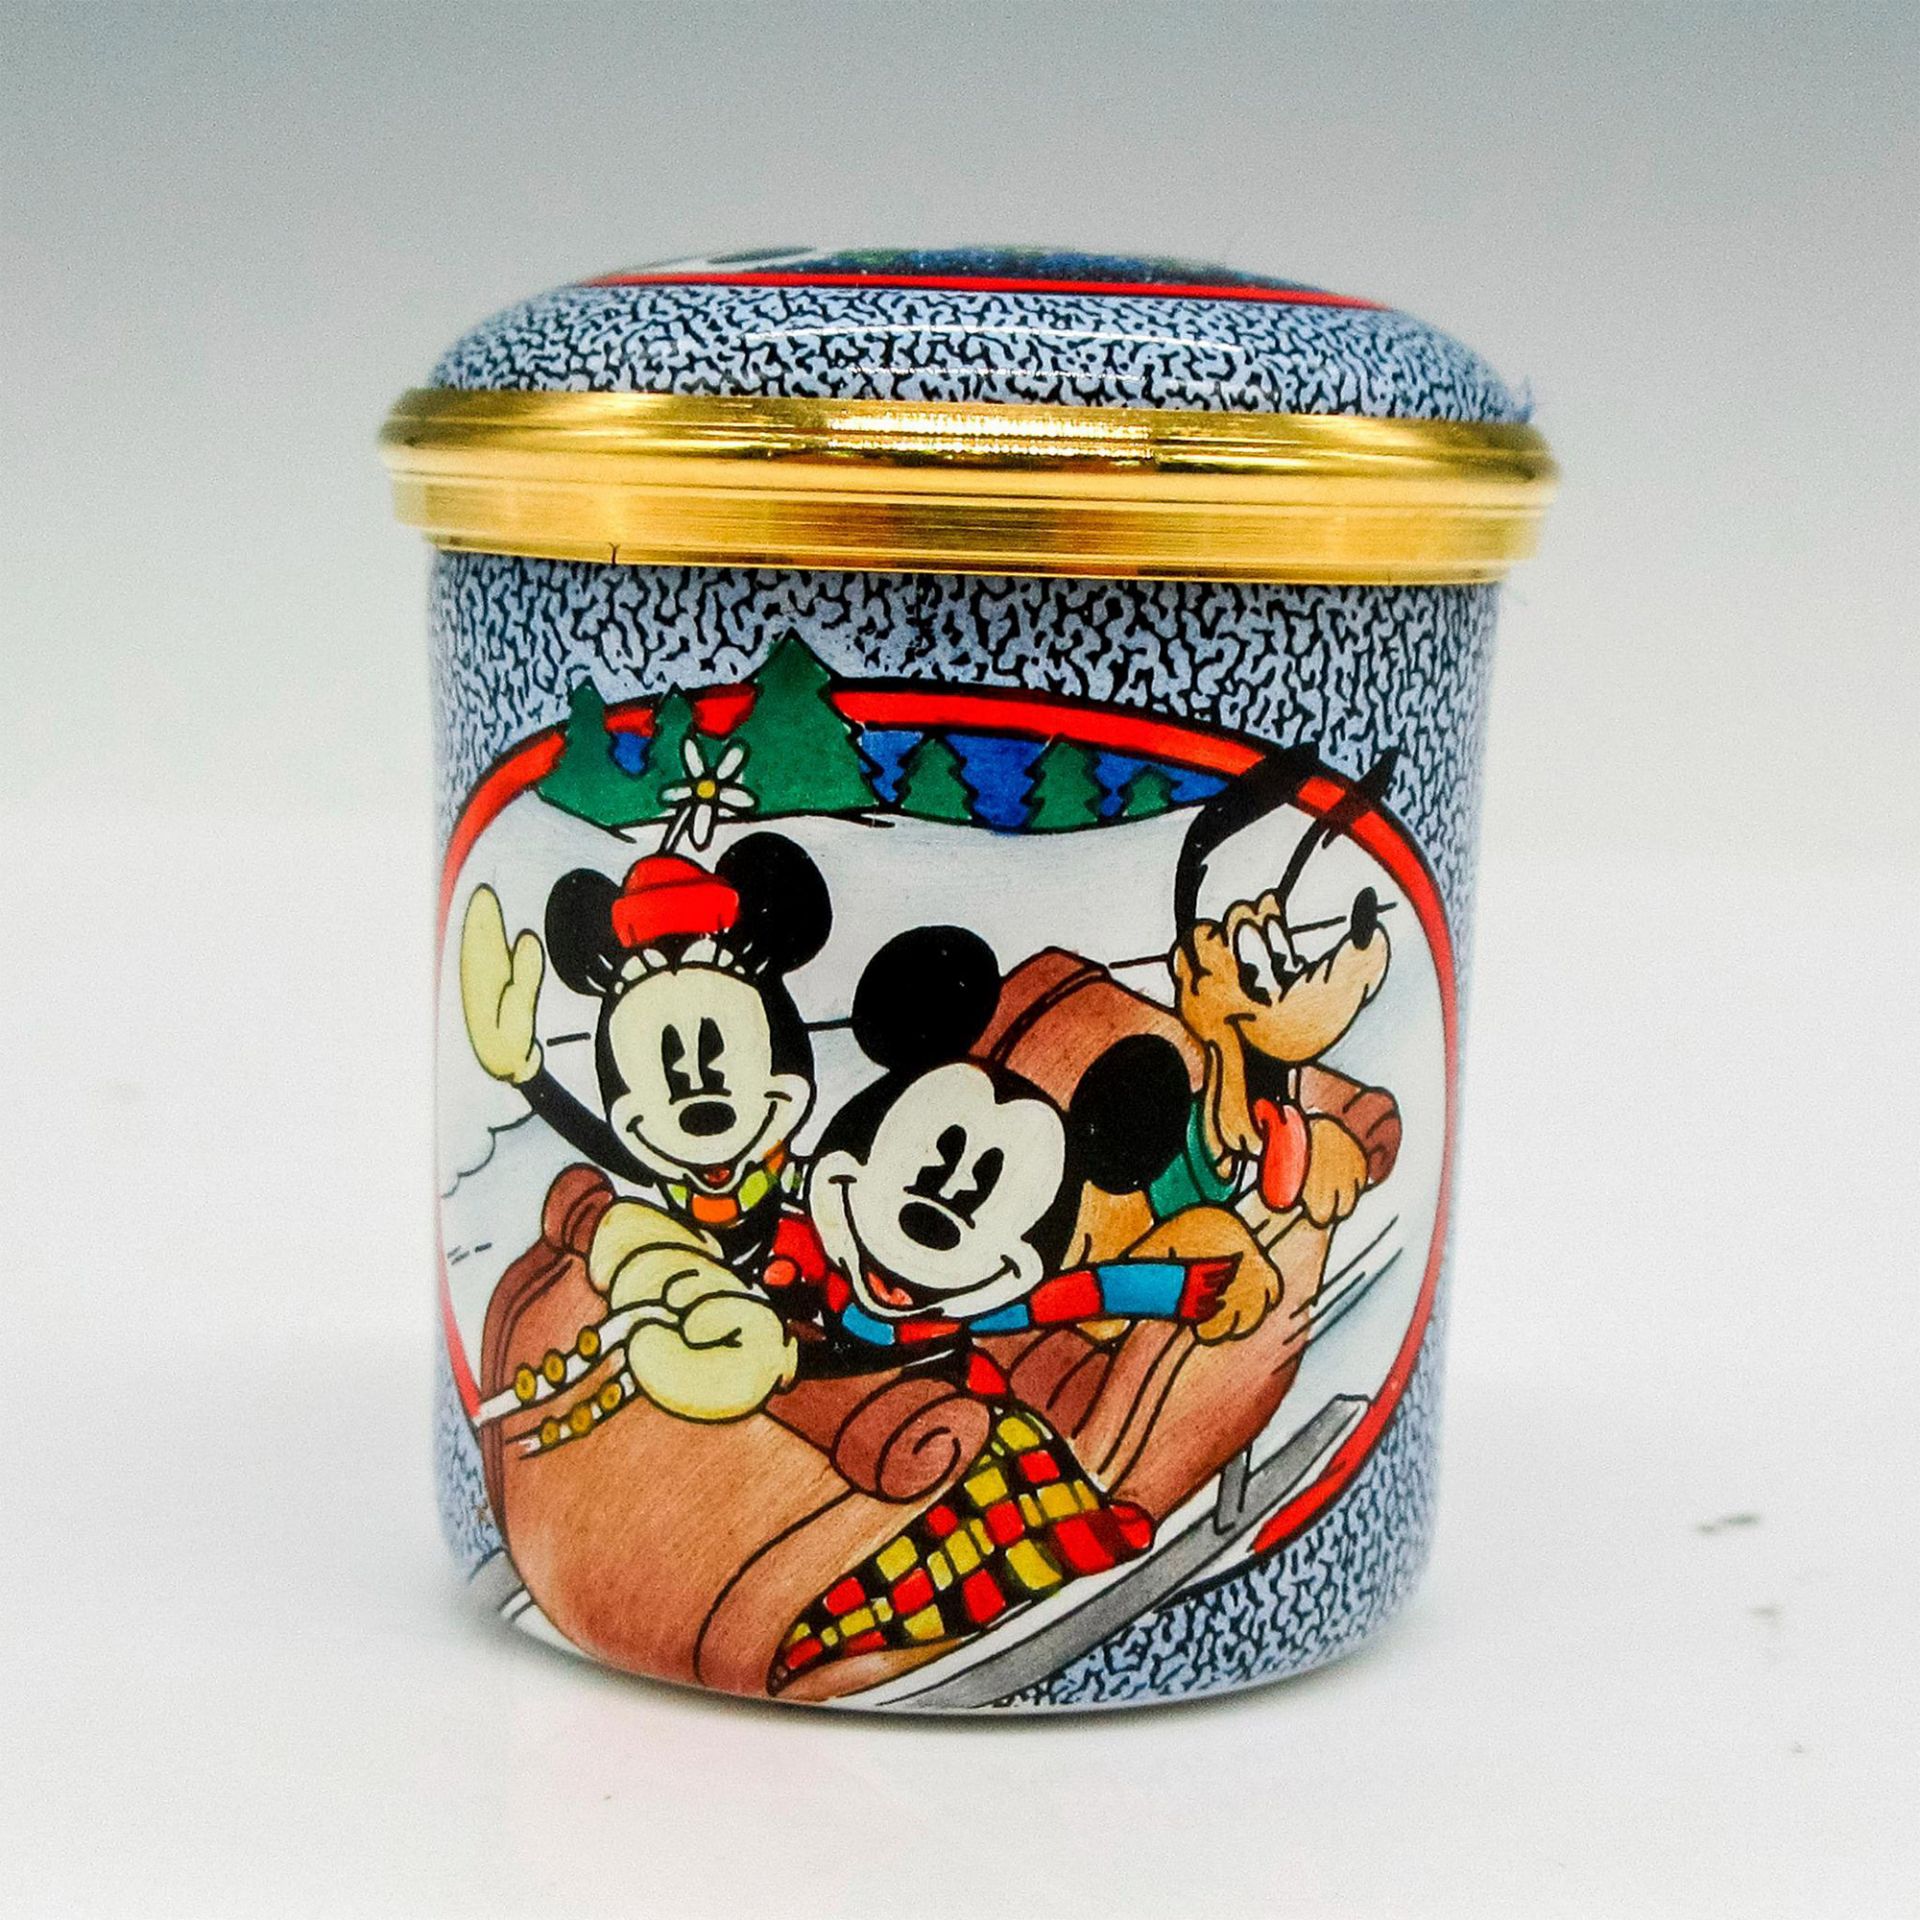 Halcyon Days Disney Enamels Trinket Box, Mickey and Donald - Image 2 of 4